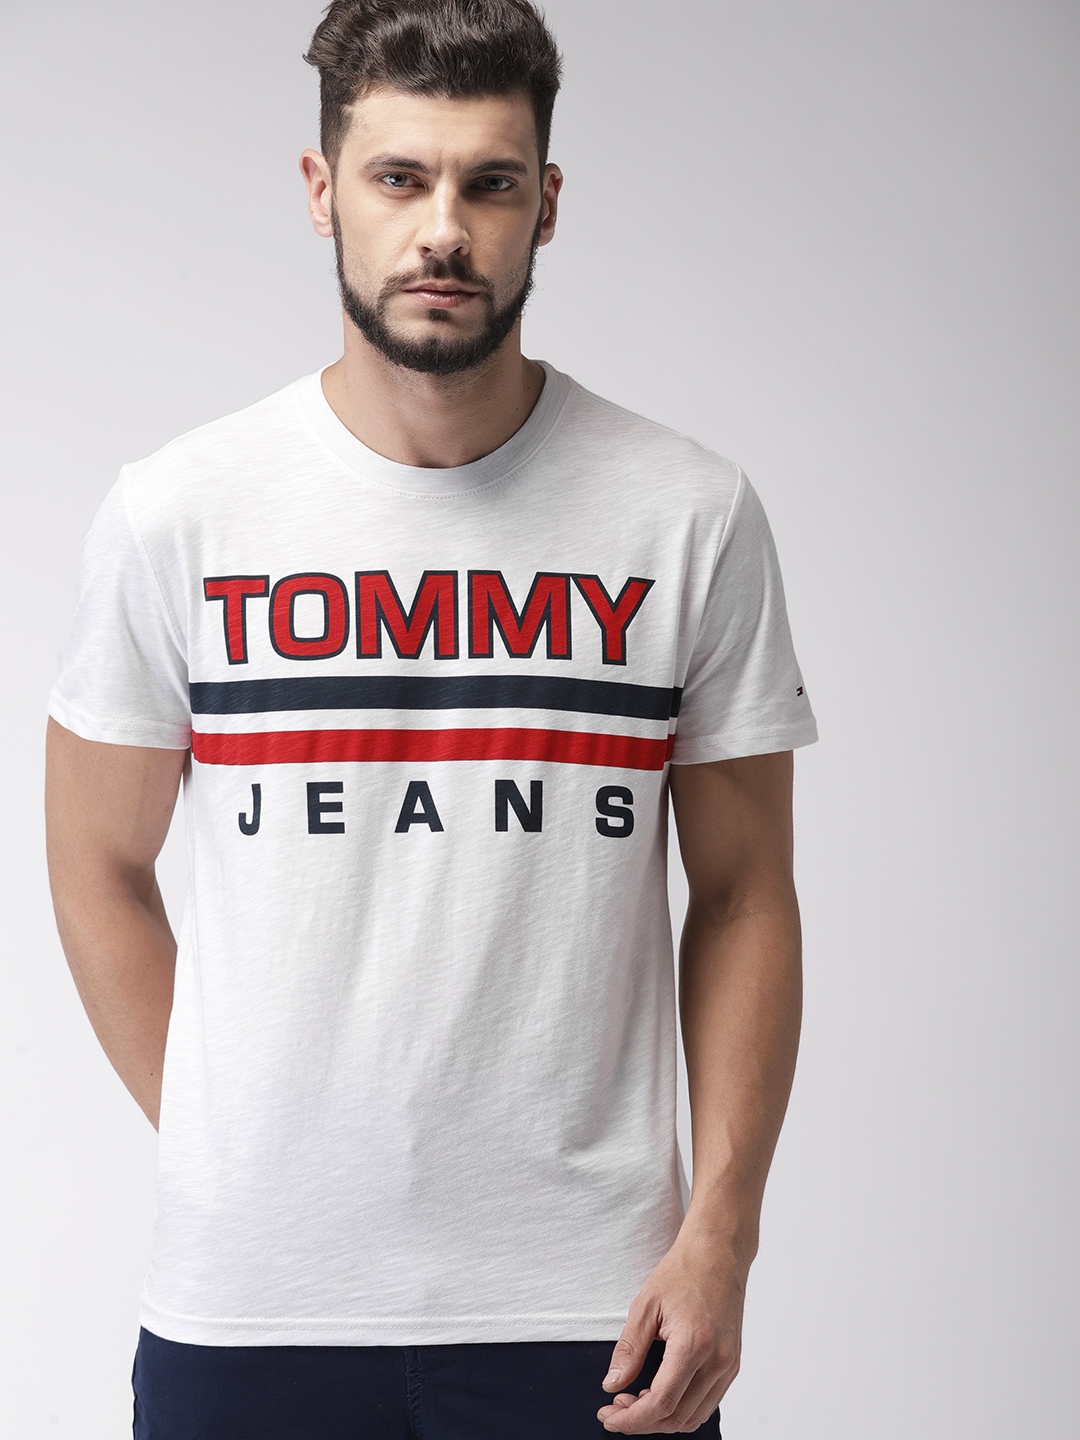 tommy hilfiger t shirt 2019